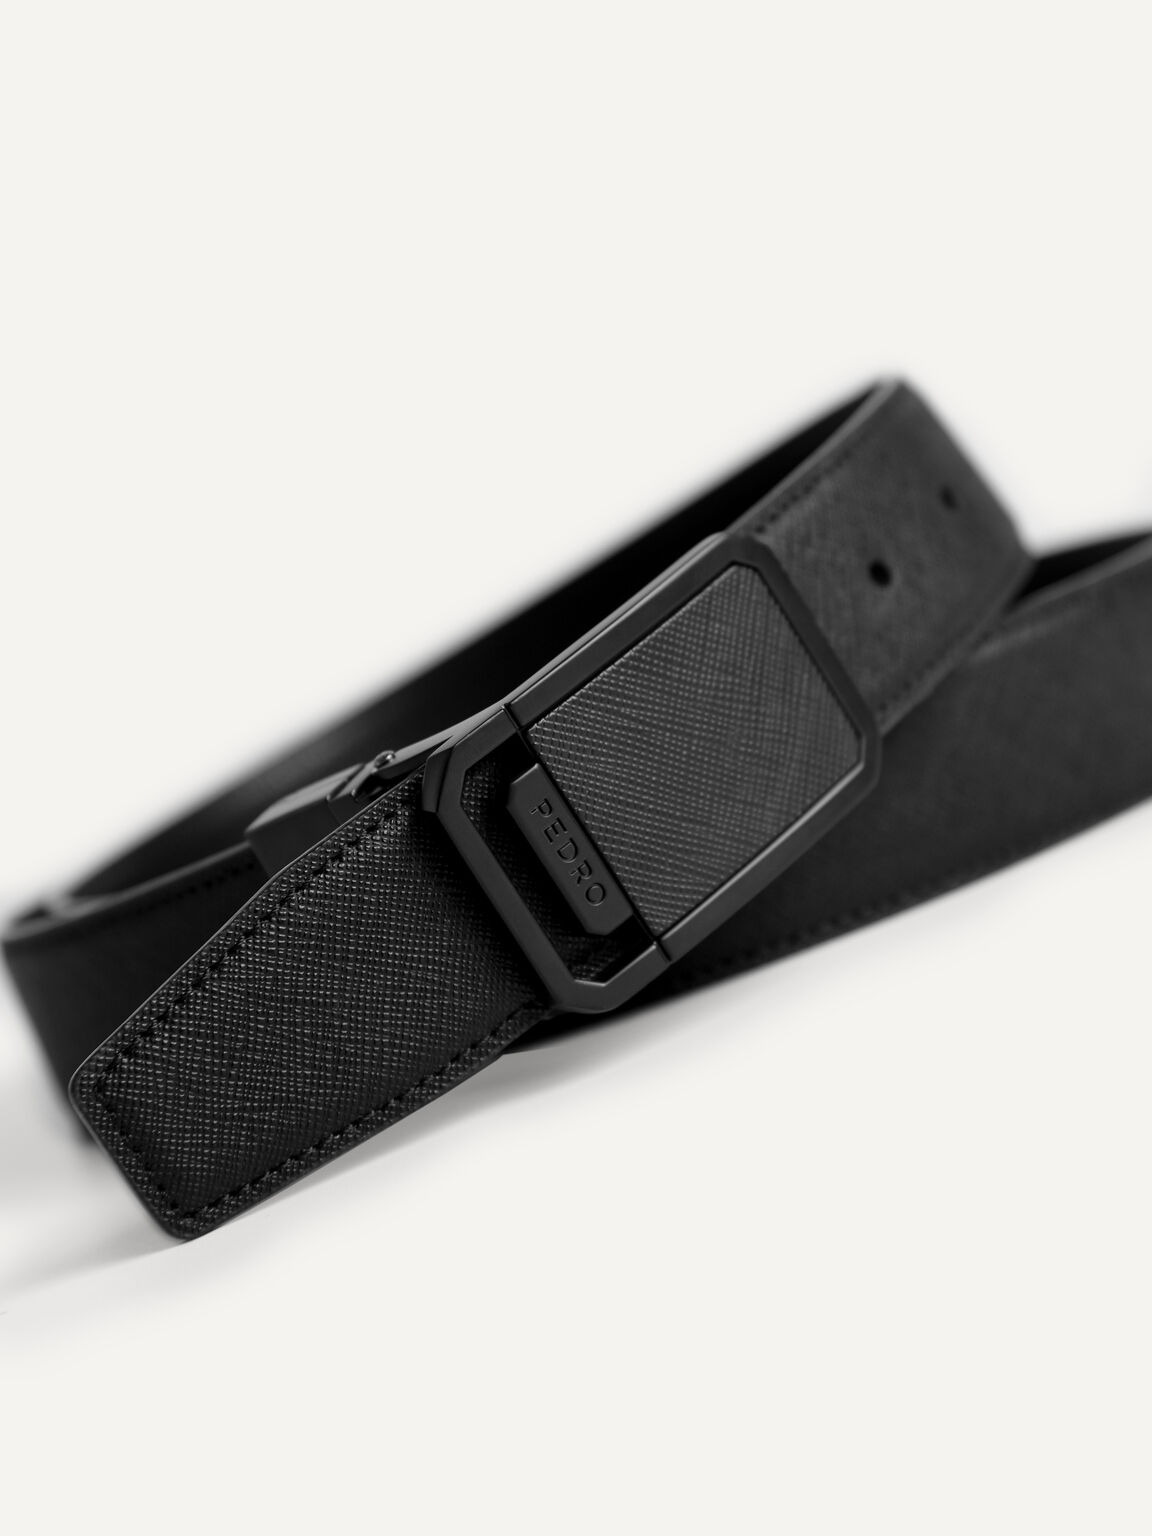 Reversible Textured Leather Belt, Black